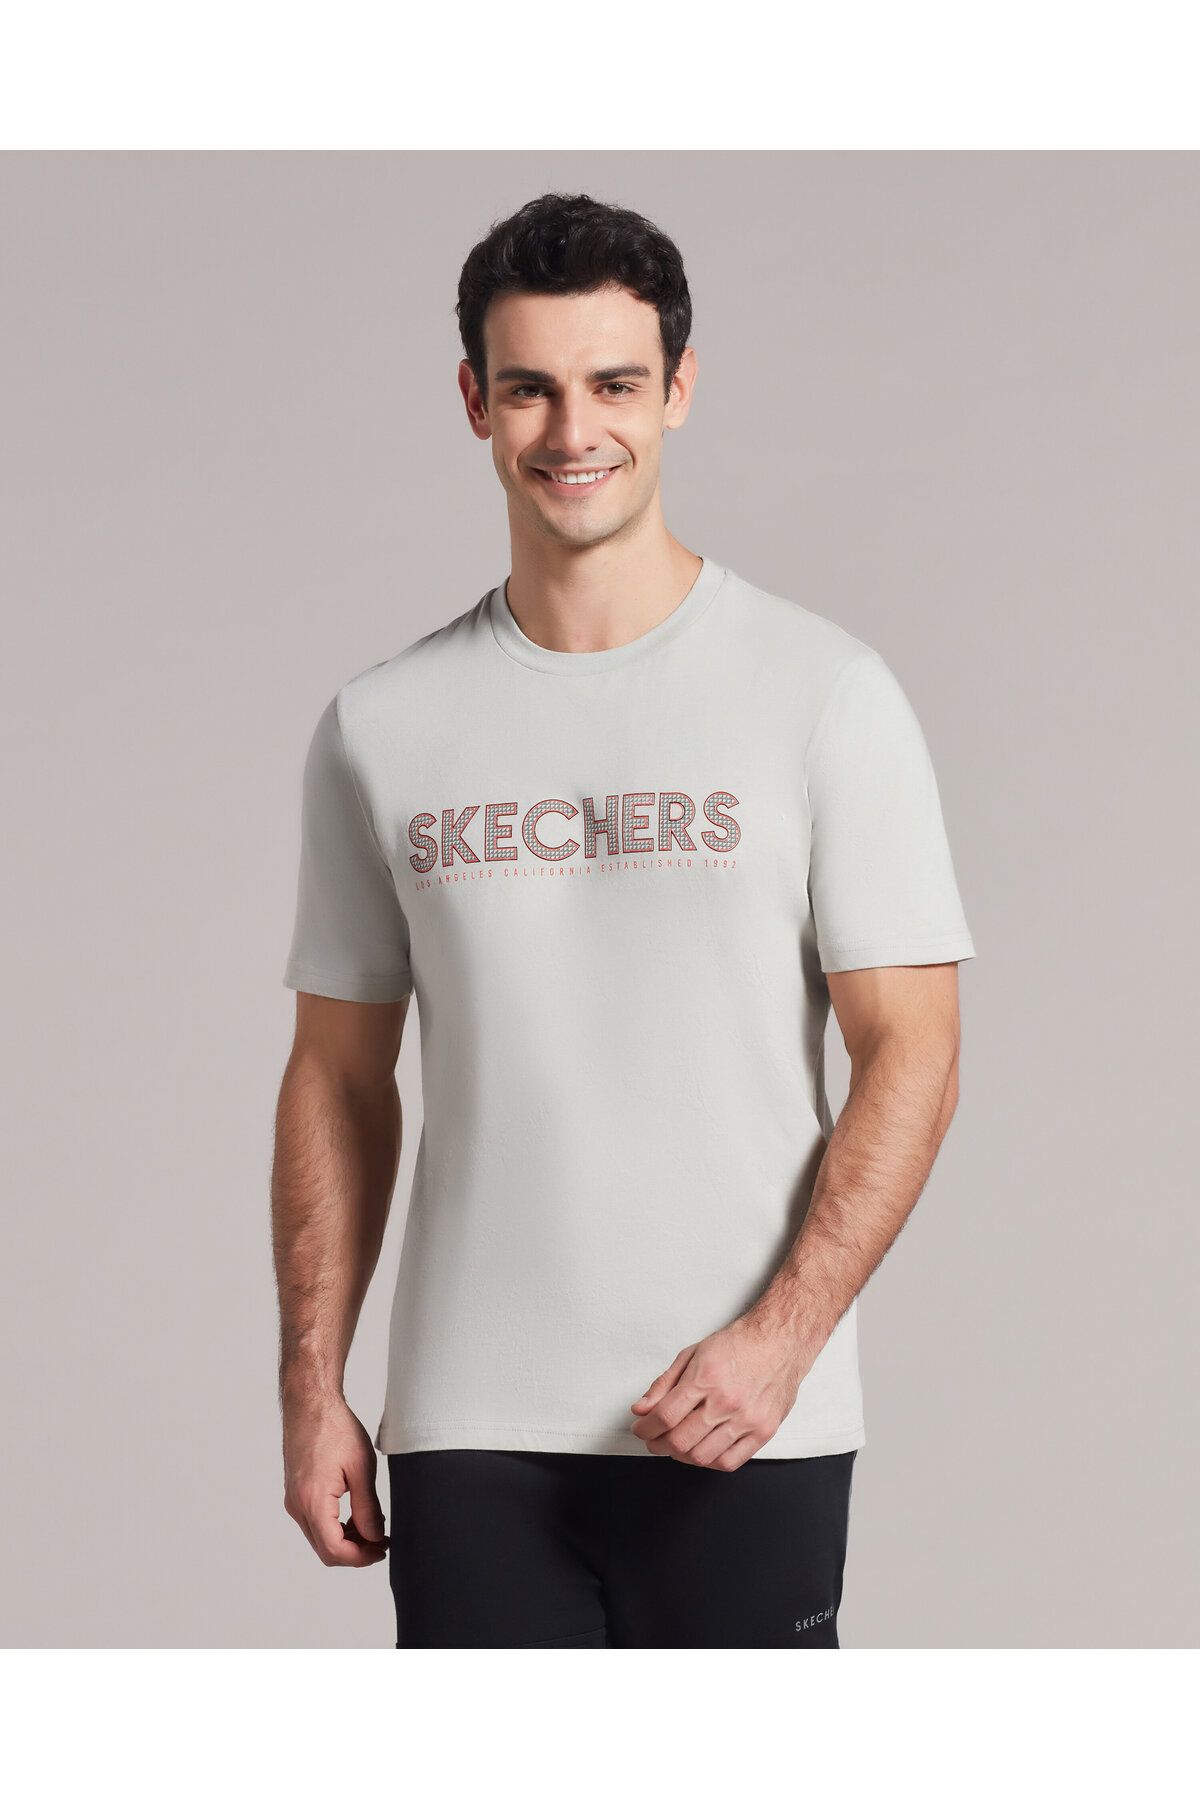 Skechers M Graphic Tee Big Logo T-shirt Erkek Gri Tshirt S221135-013